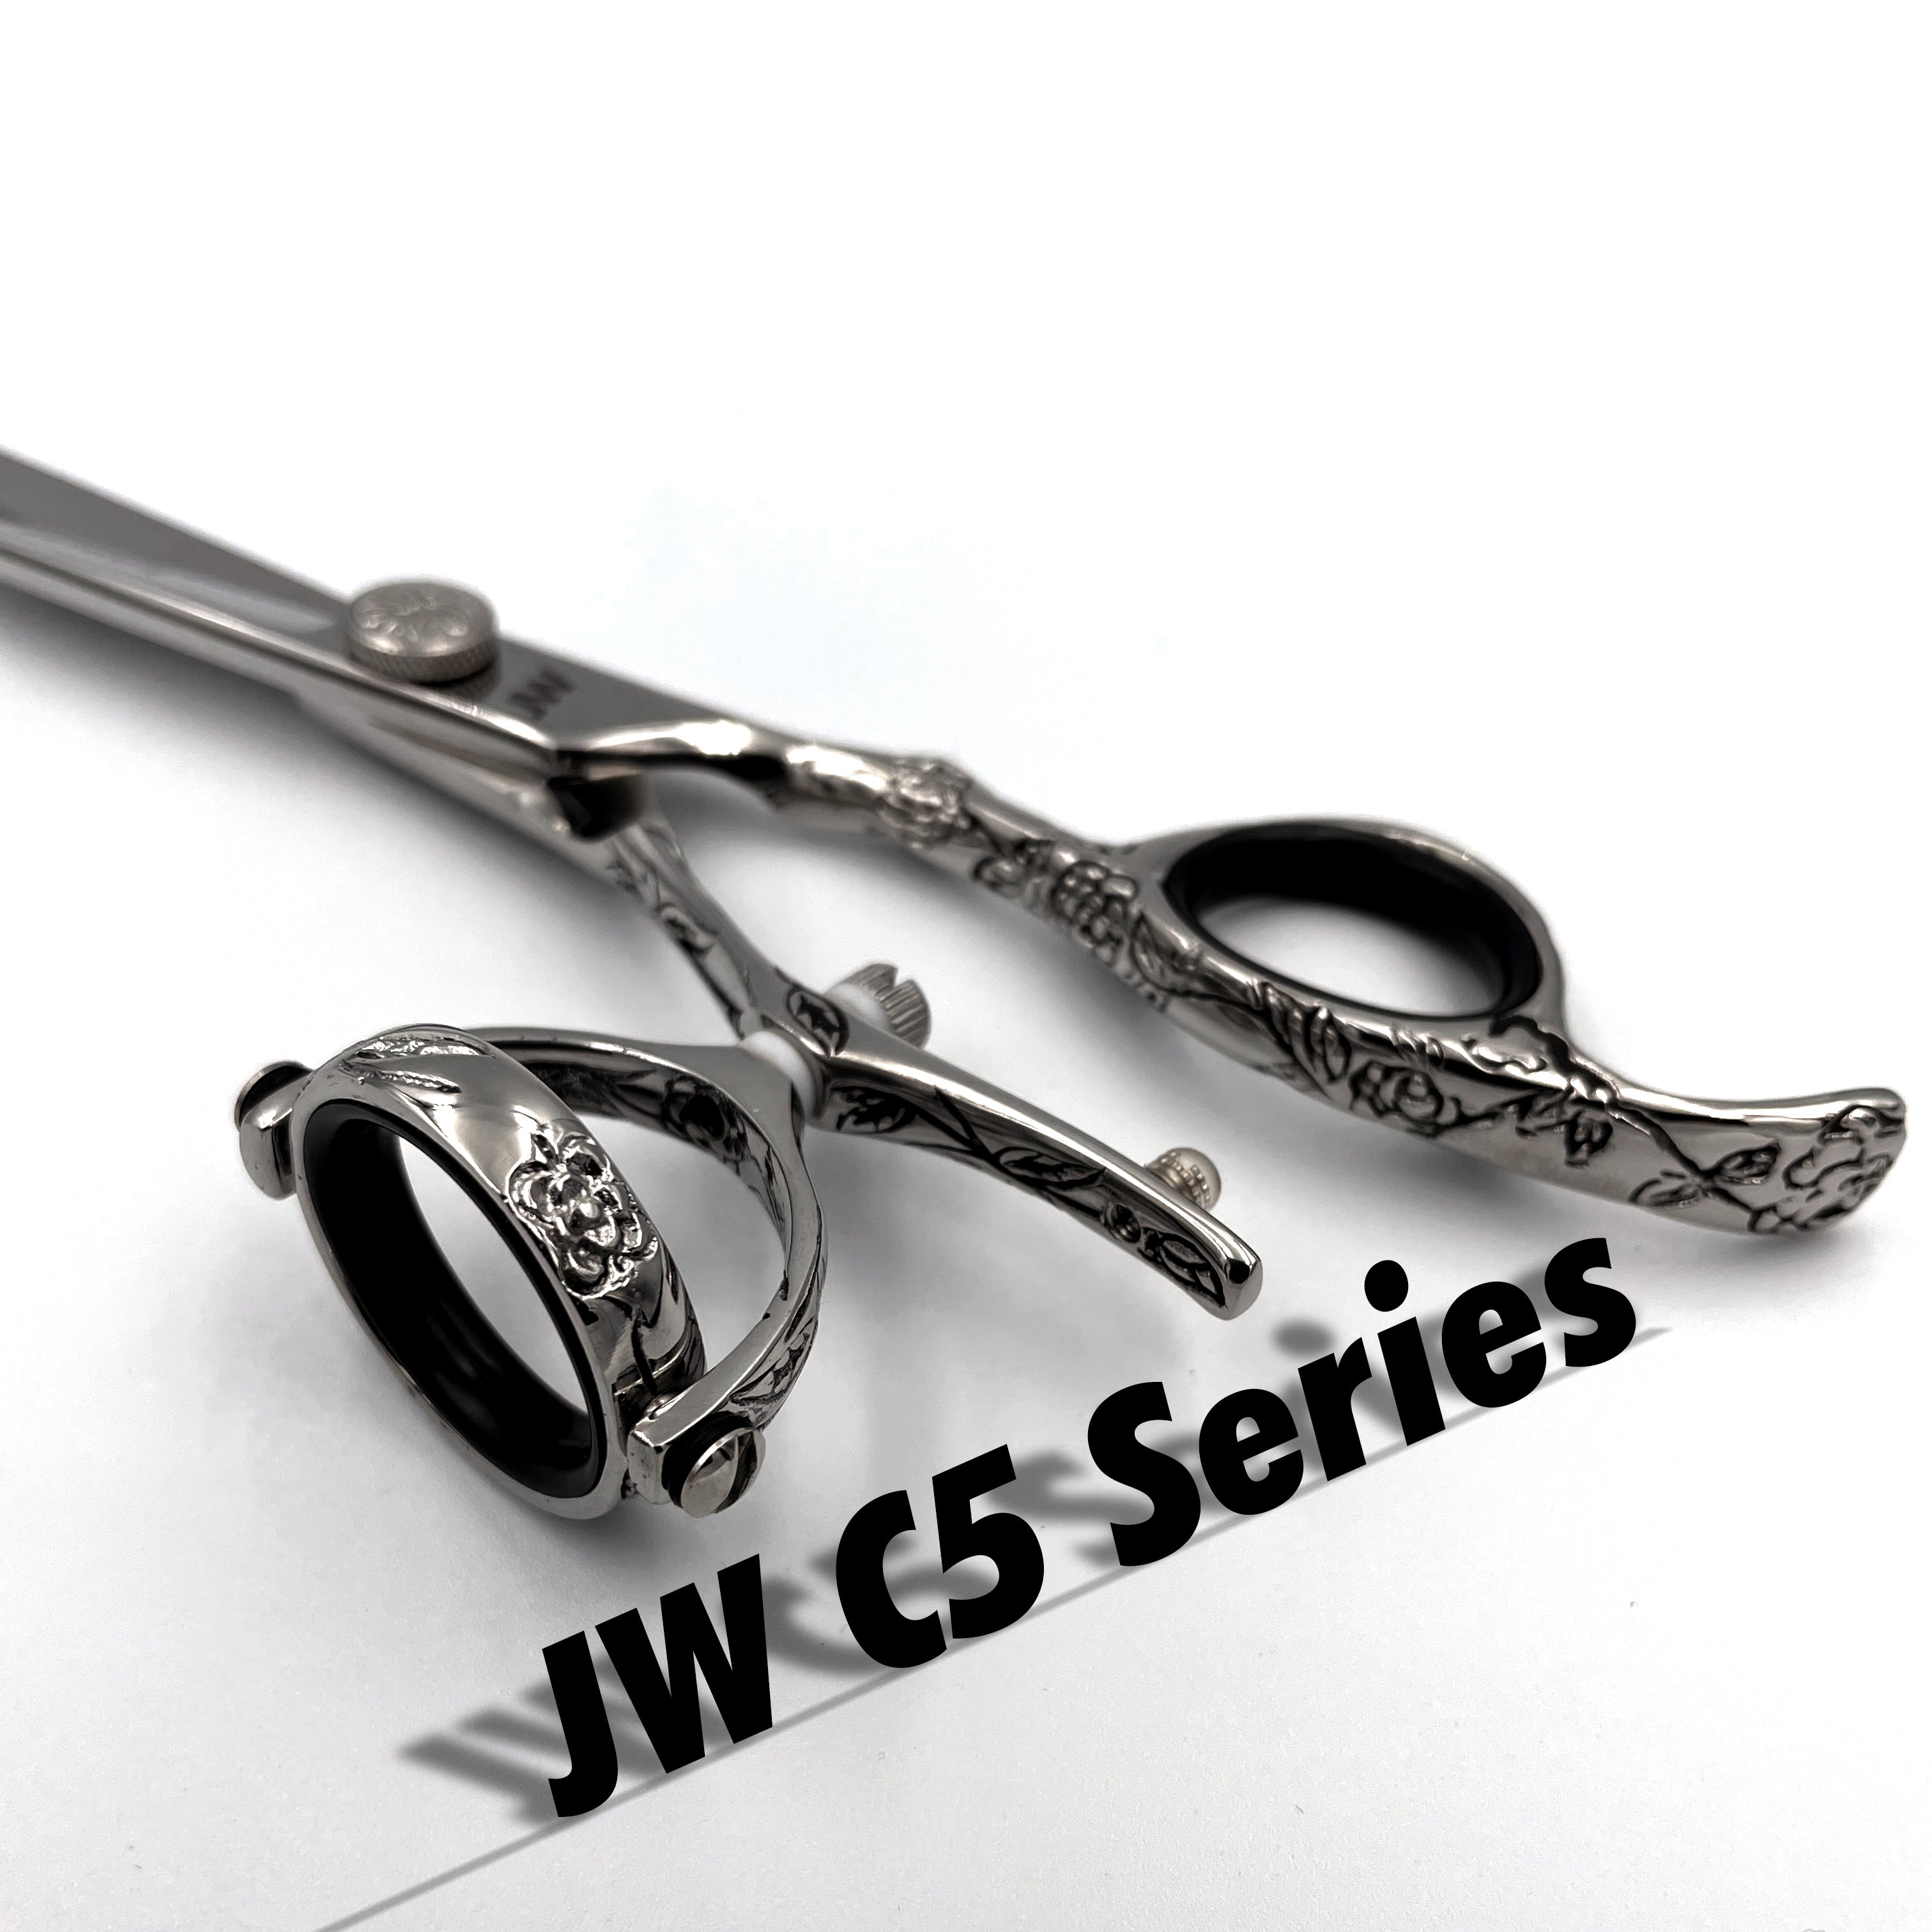 JW C5 Full Swivel Series